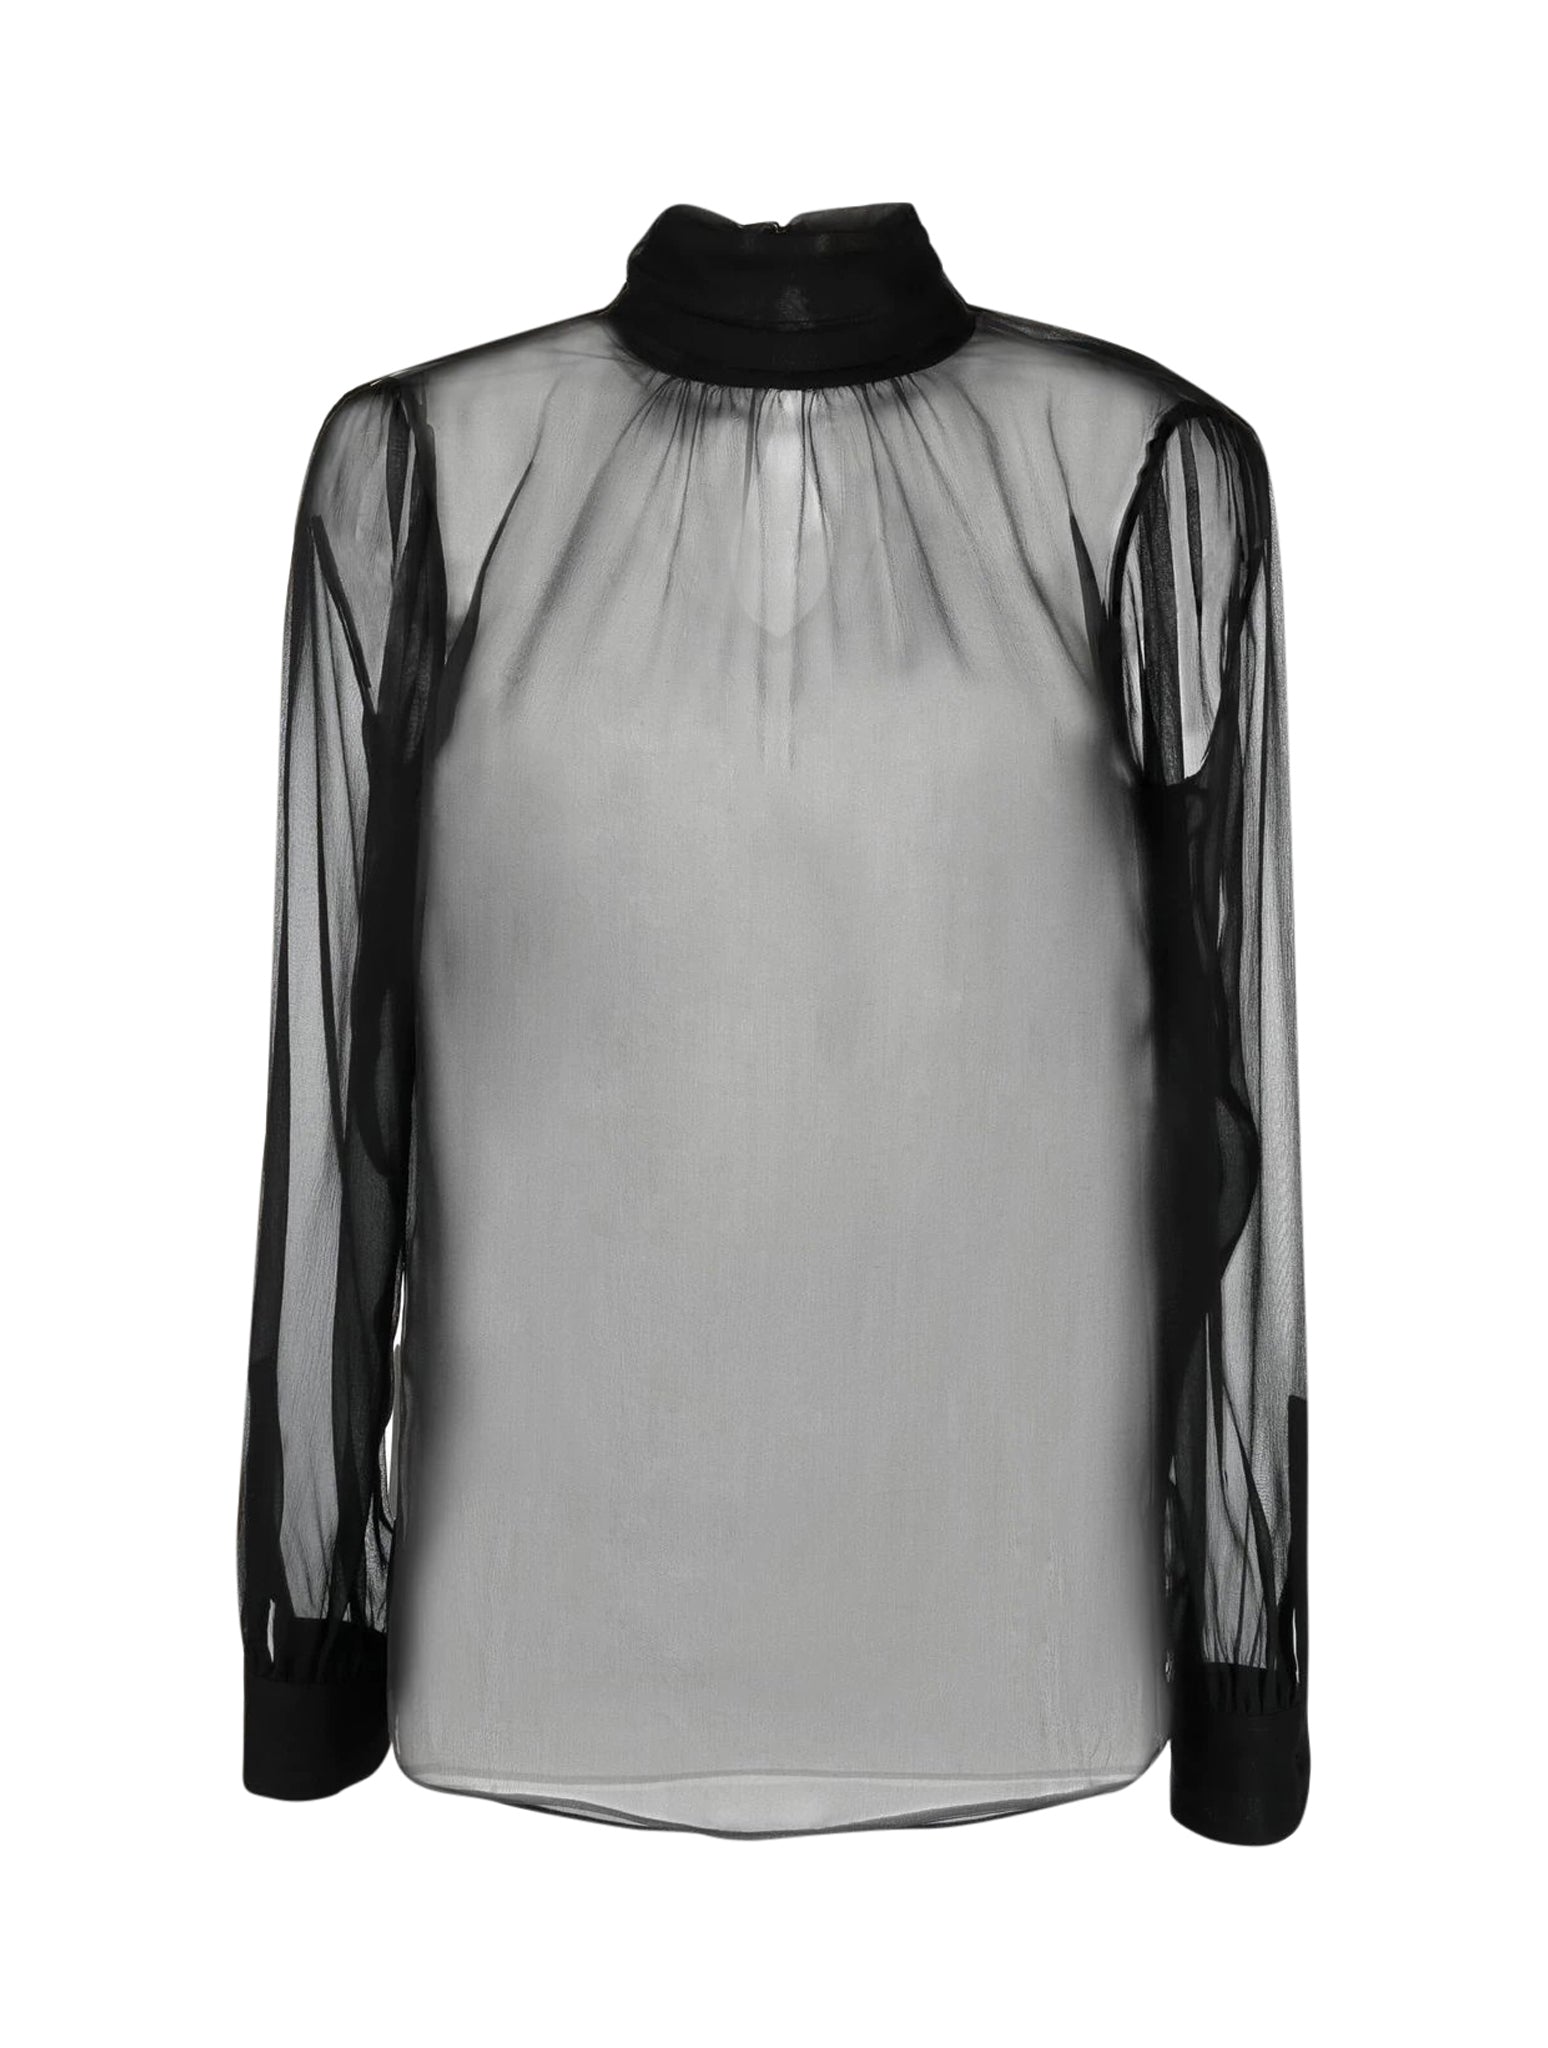 Semi-transparent blouse